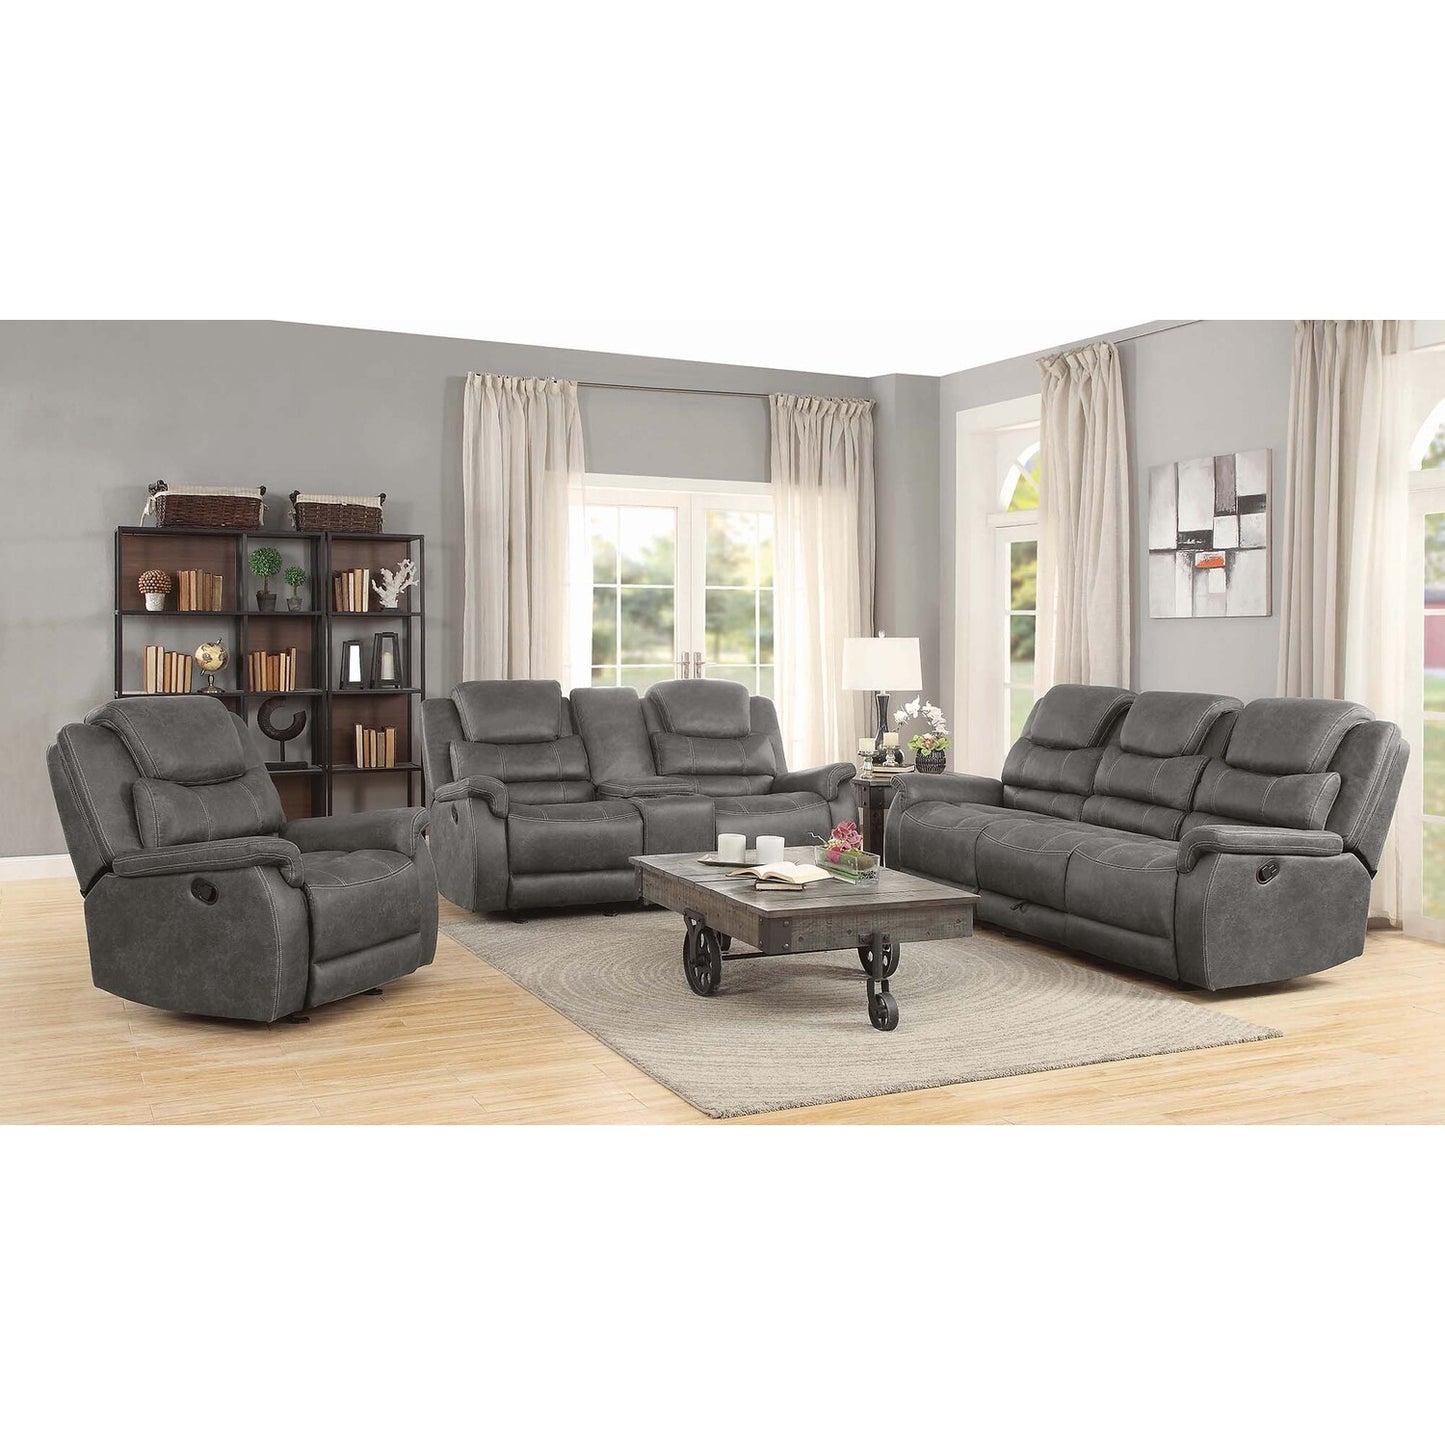 Wyatt 2-piece Upholstered Living Room Set Grey